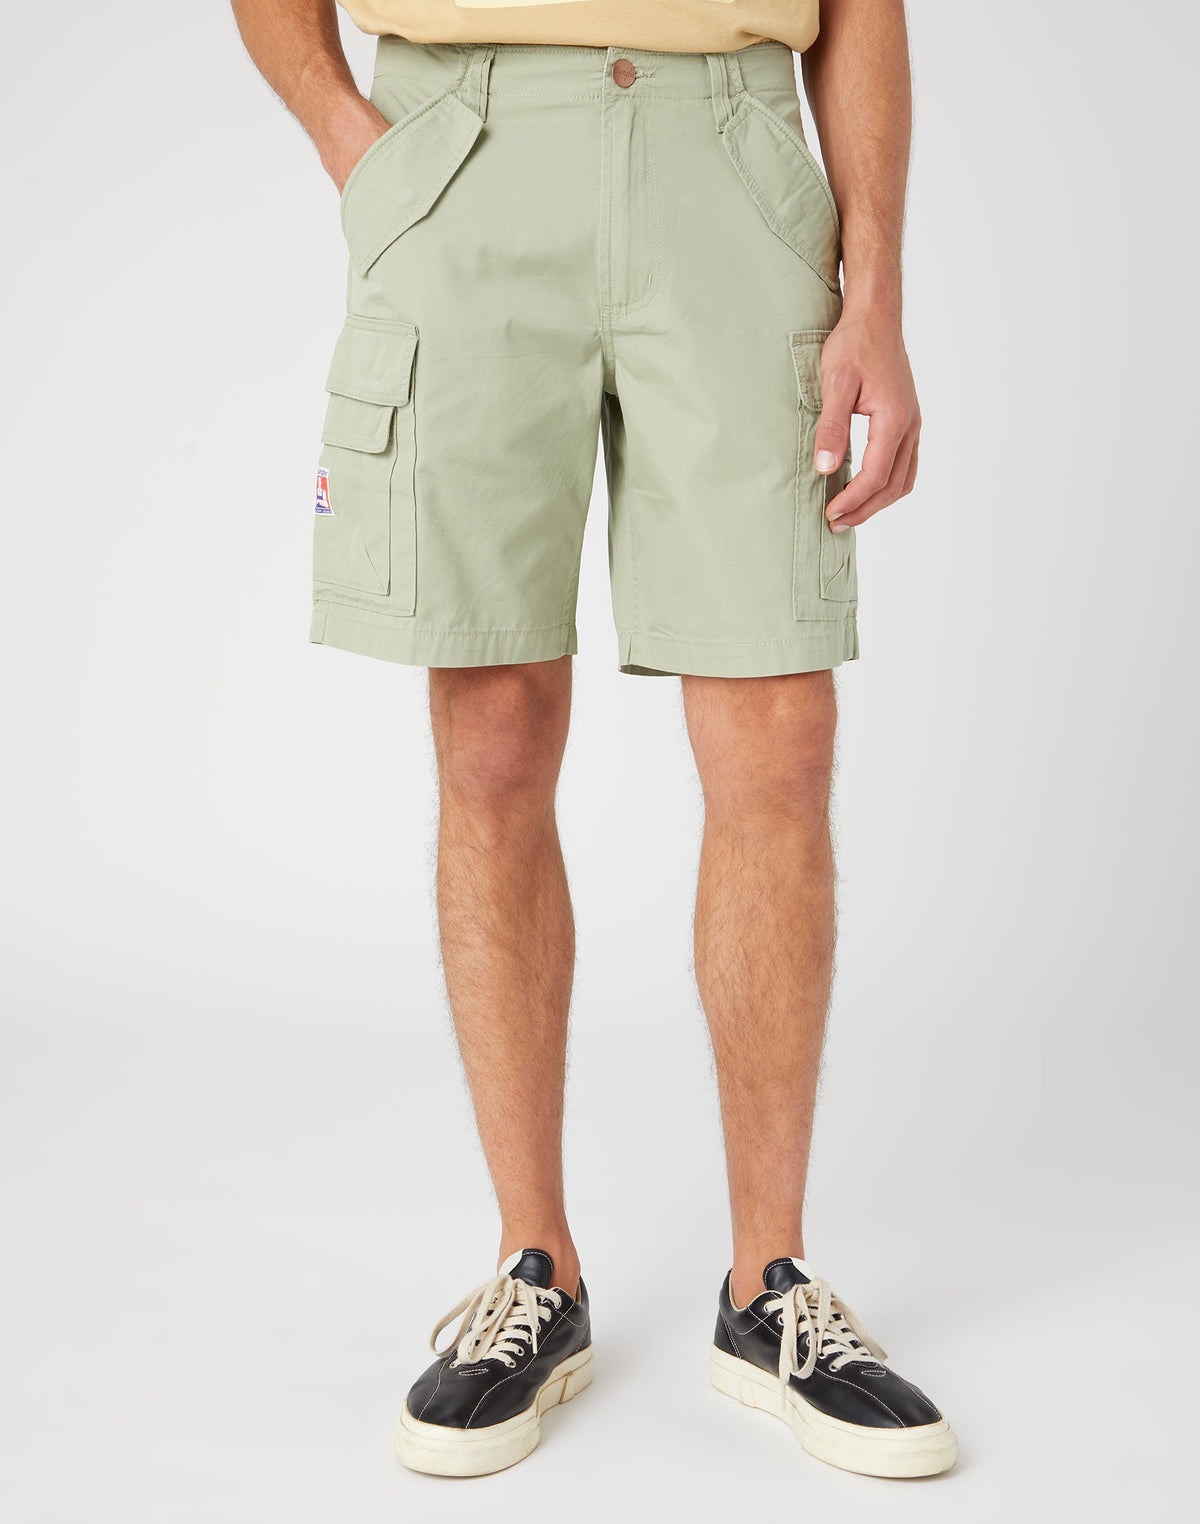 Casey Jones Cargo Shorts in Tea Leaf